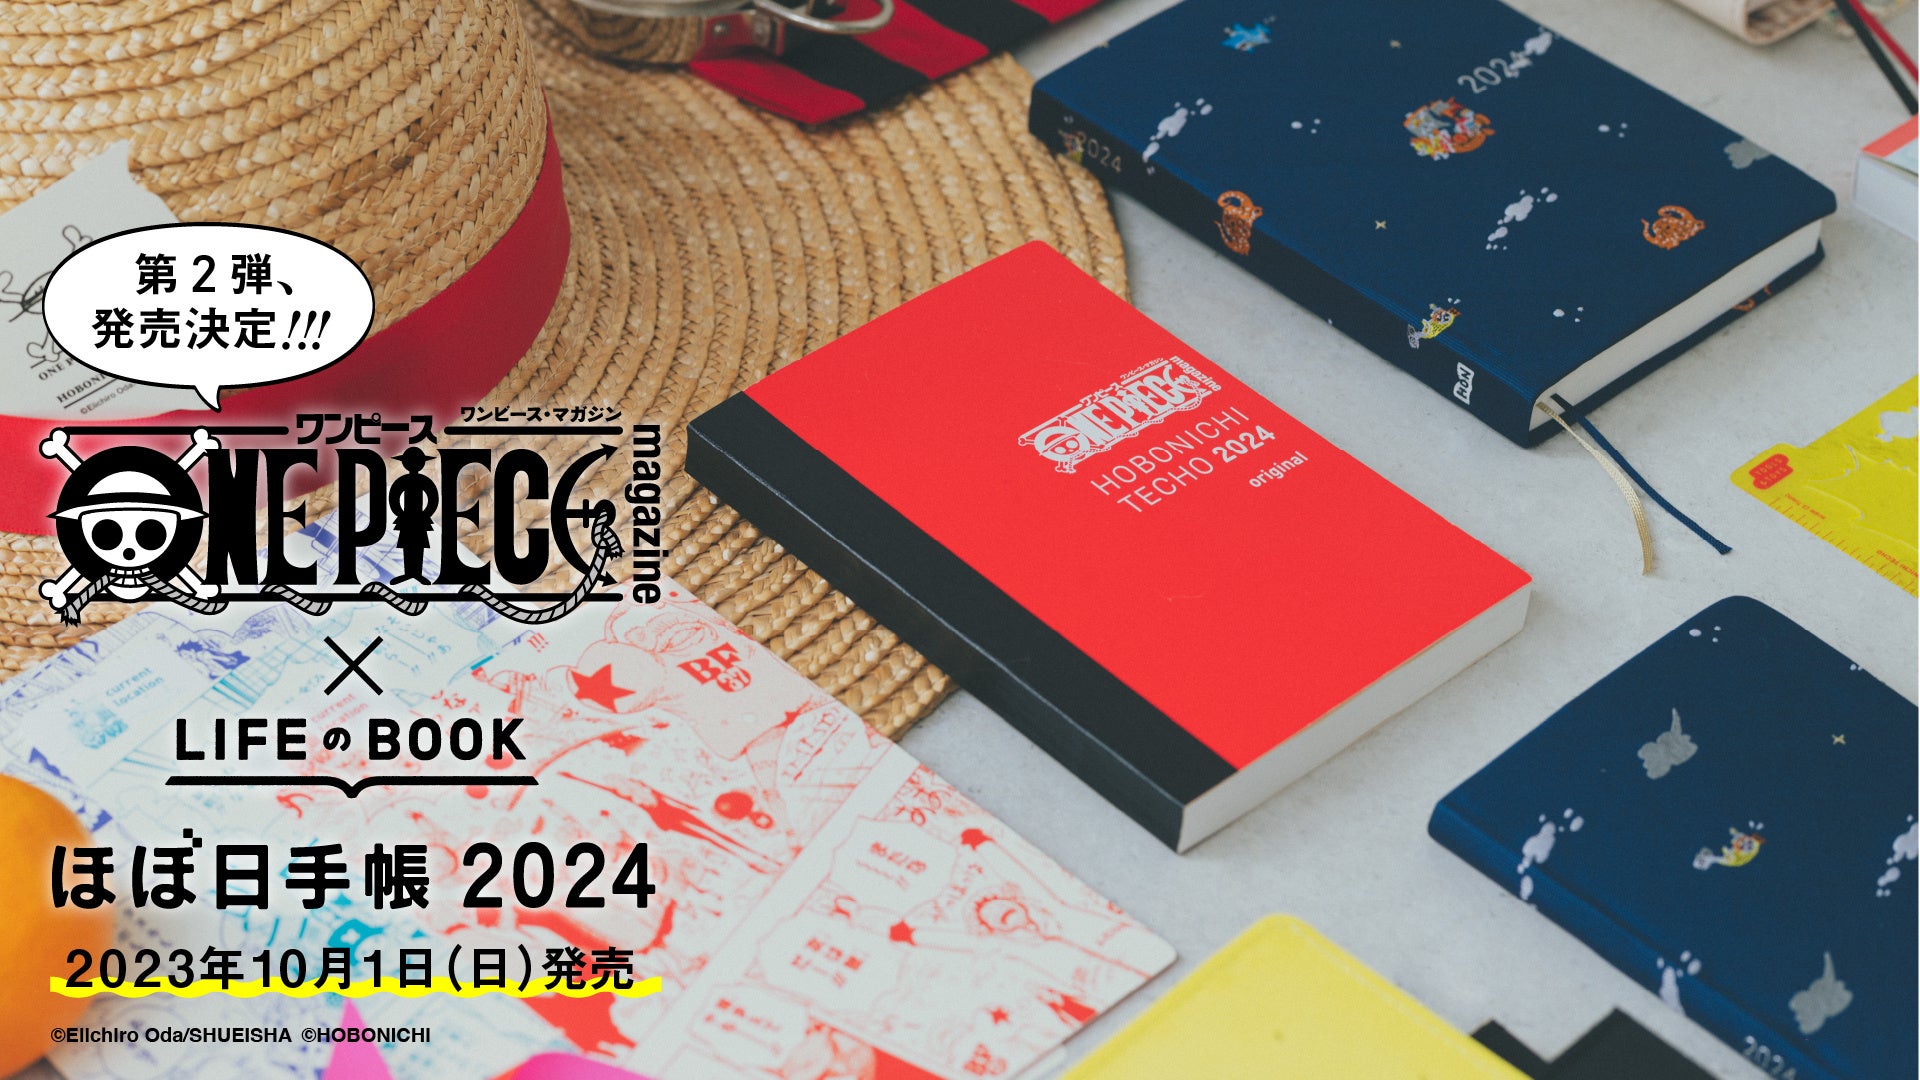 『ONE PIECE magazine』×ほぼ日手帳、2年目のコラボレーションが決定！366日『ONE PIECE』の言葉と過ごせる手帳や文具を、10月1日に発売。